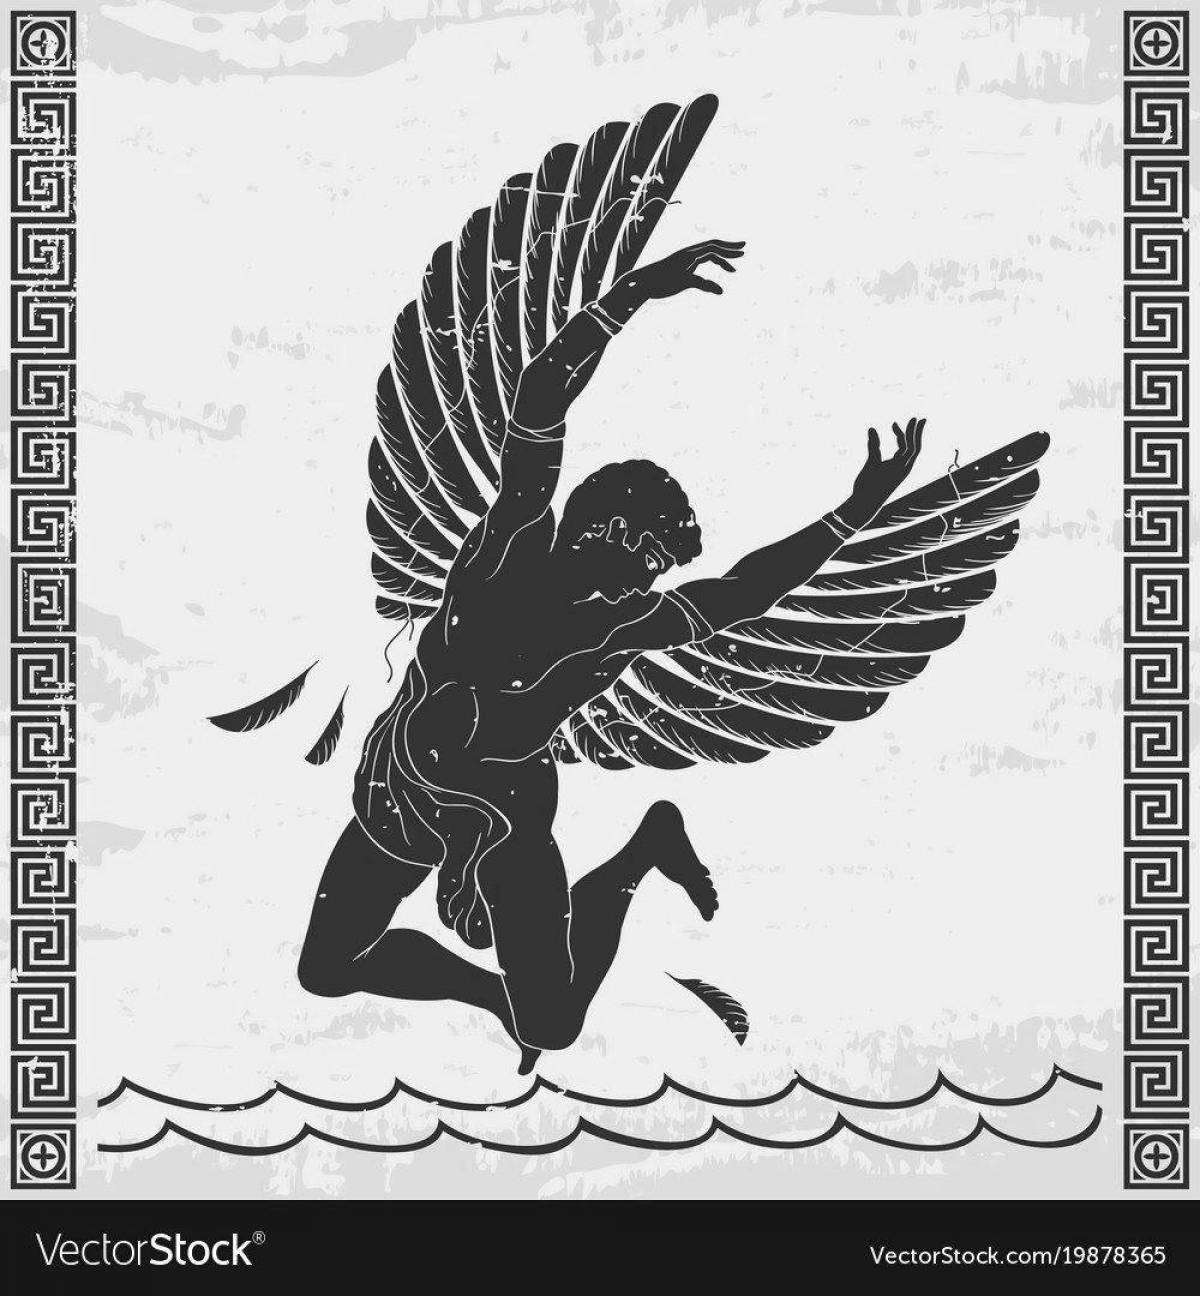 Coloring book brilliant Daedalus and Icarus